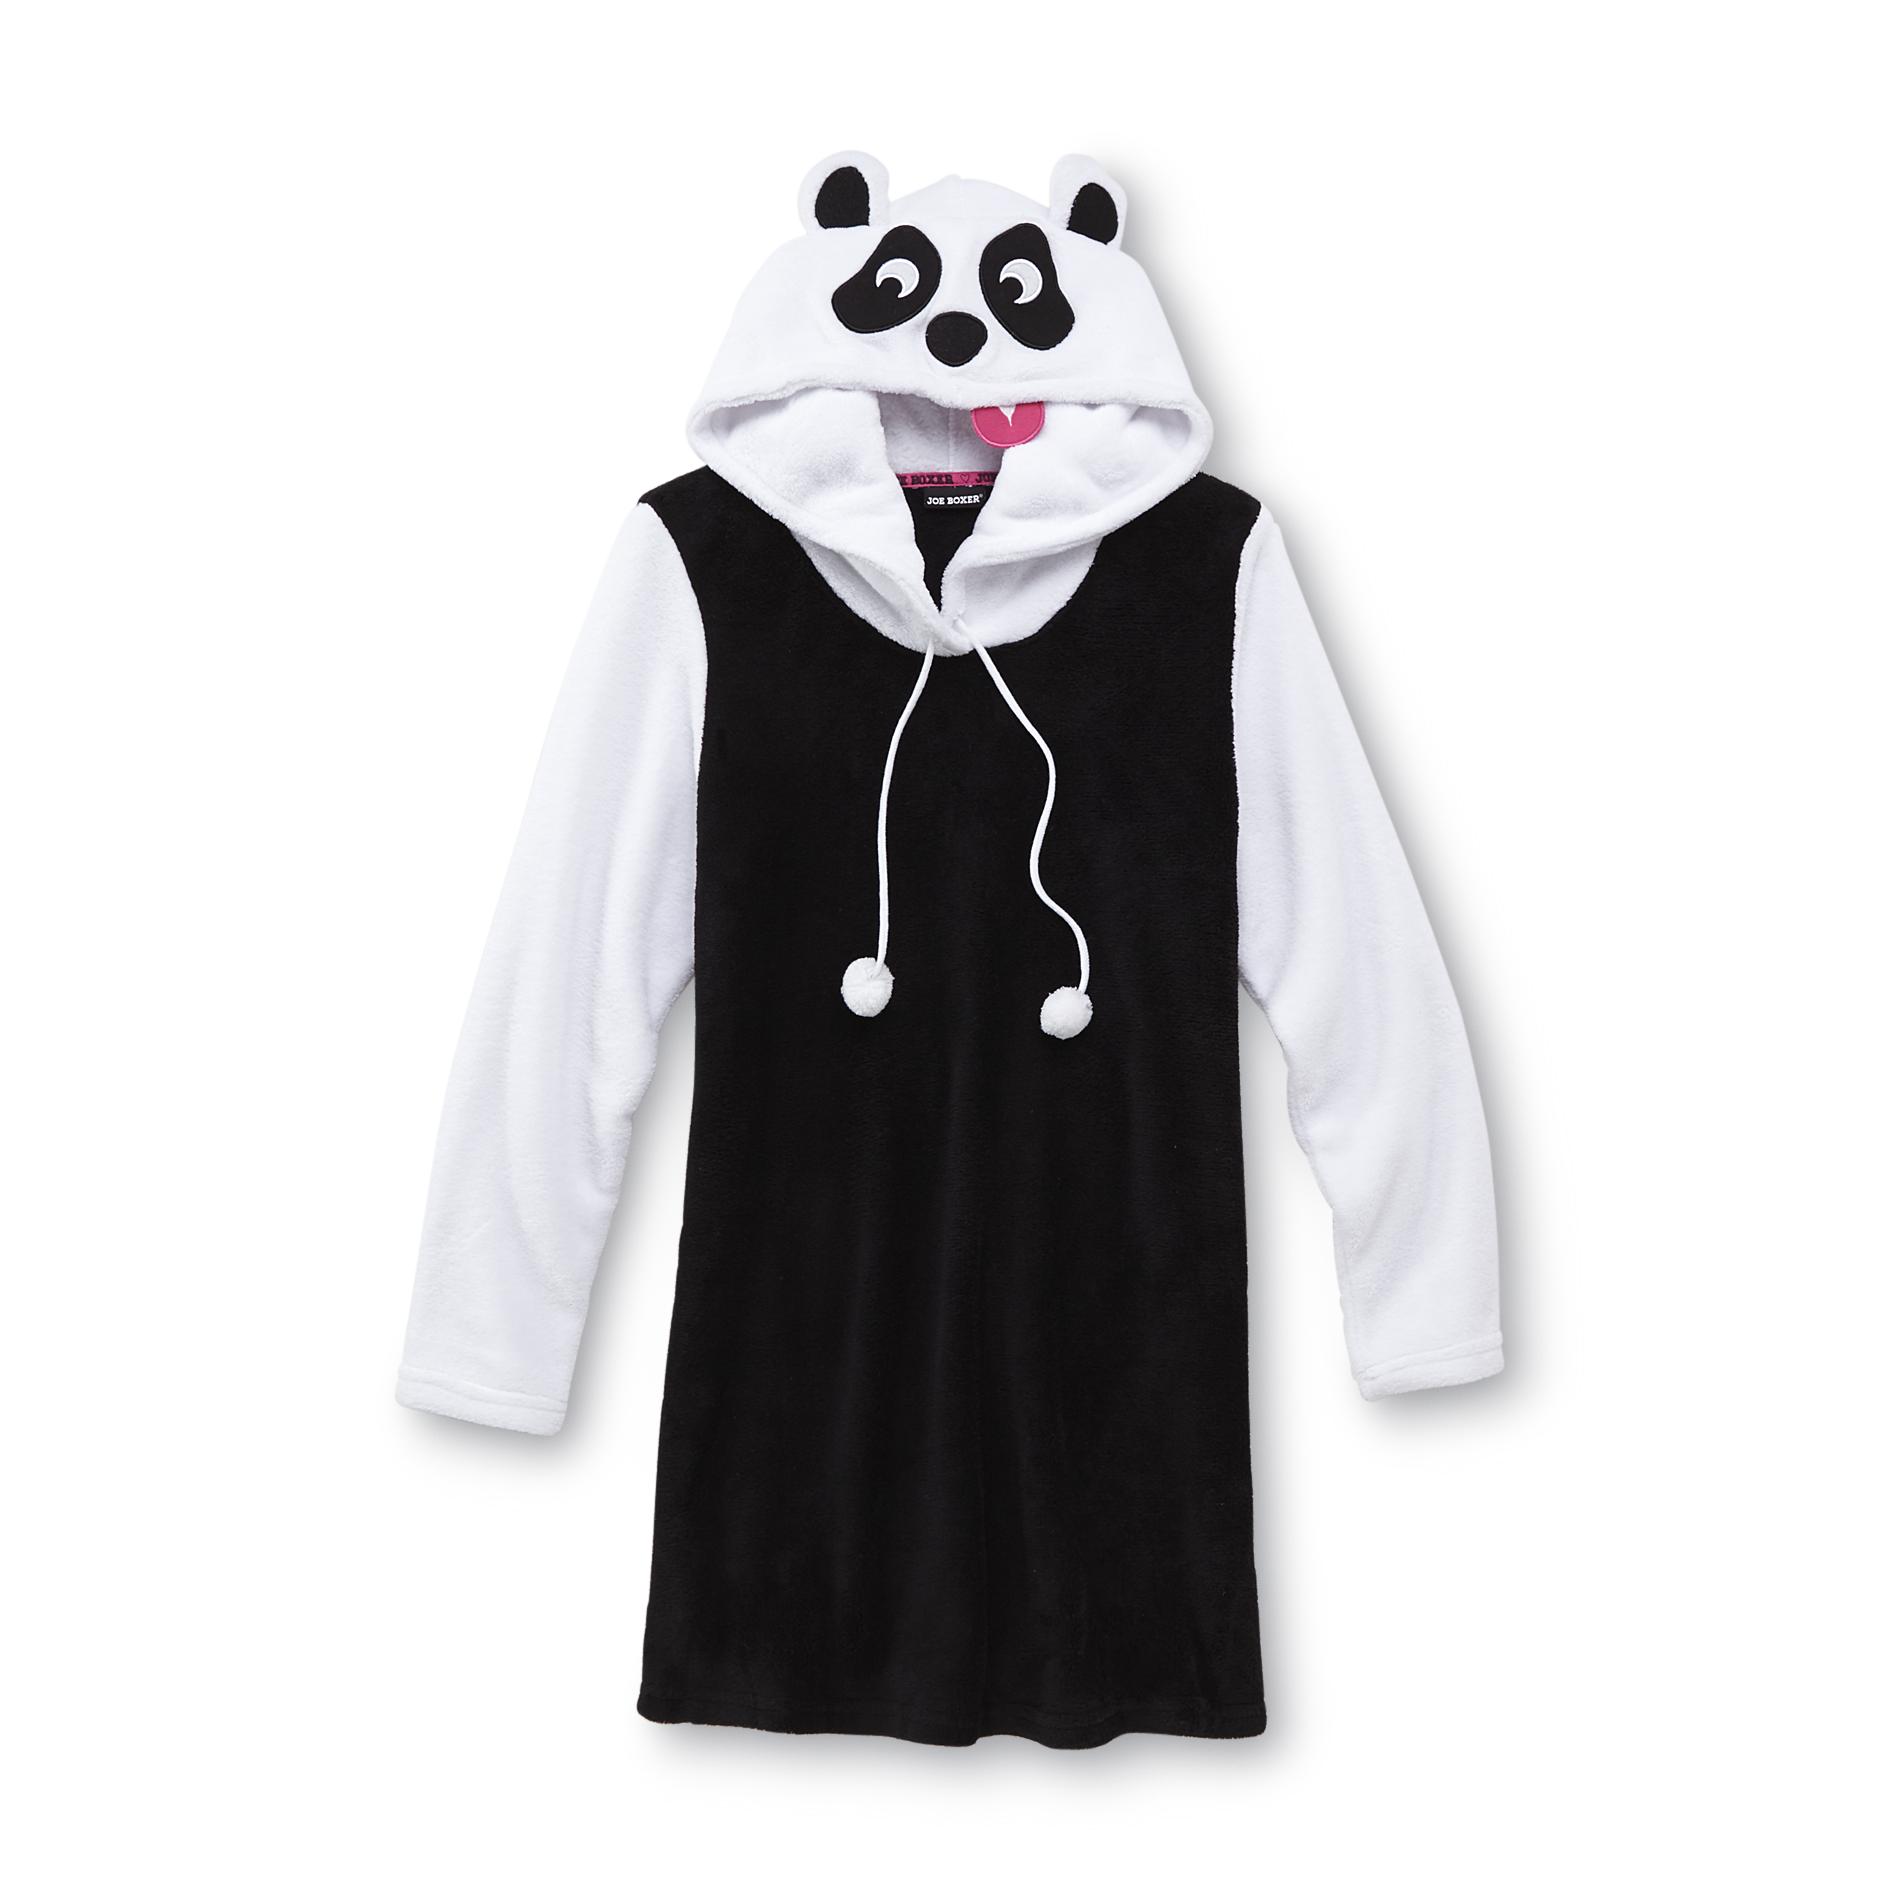 Joe Boxer Women's Plush Fleece Hooded Critter Lounger - Panda